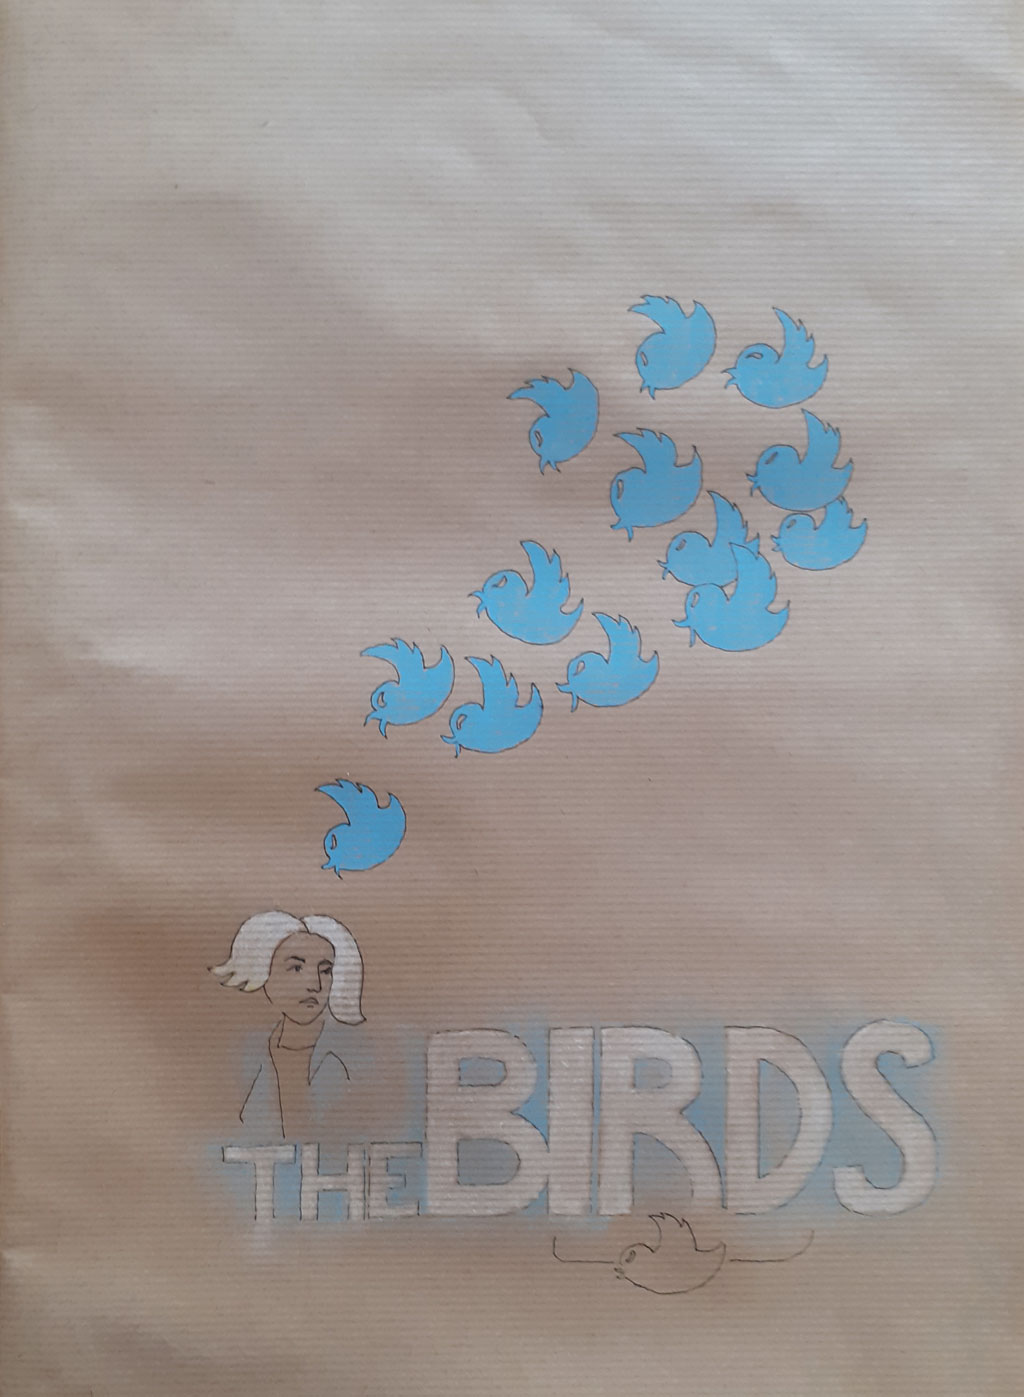 The birds